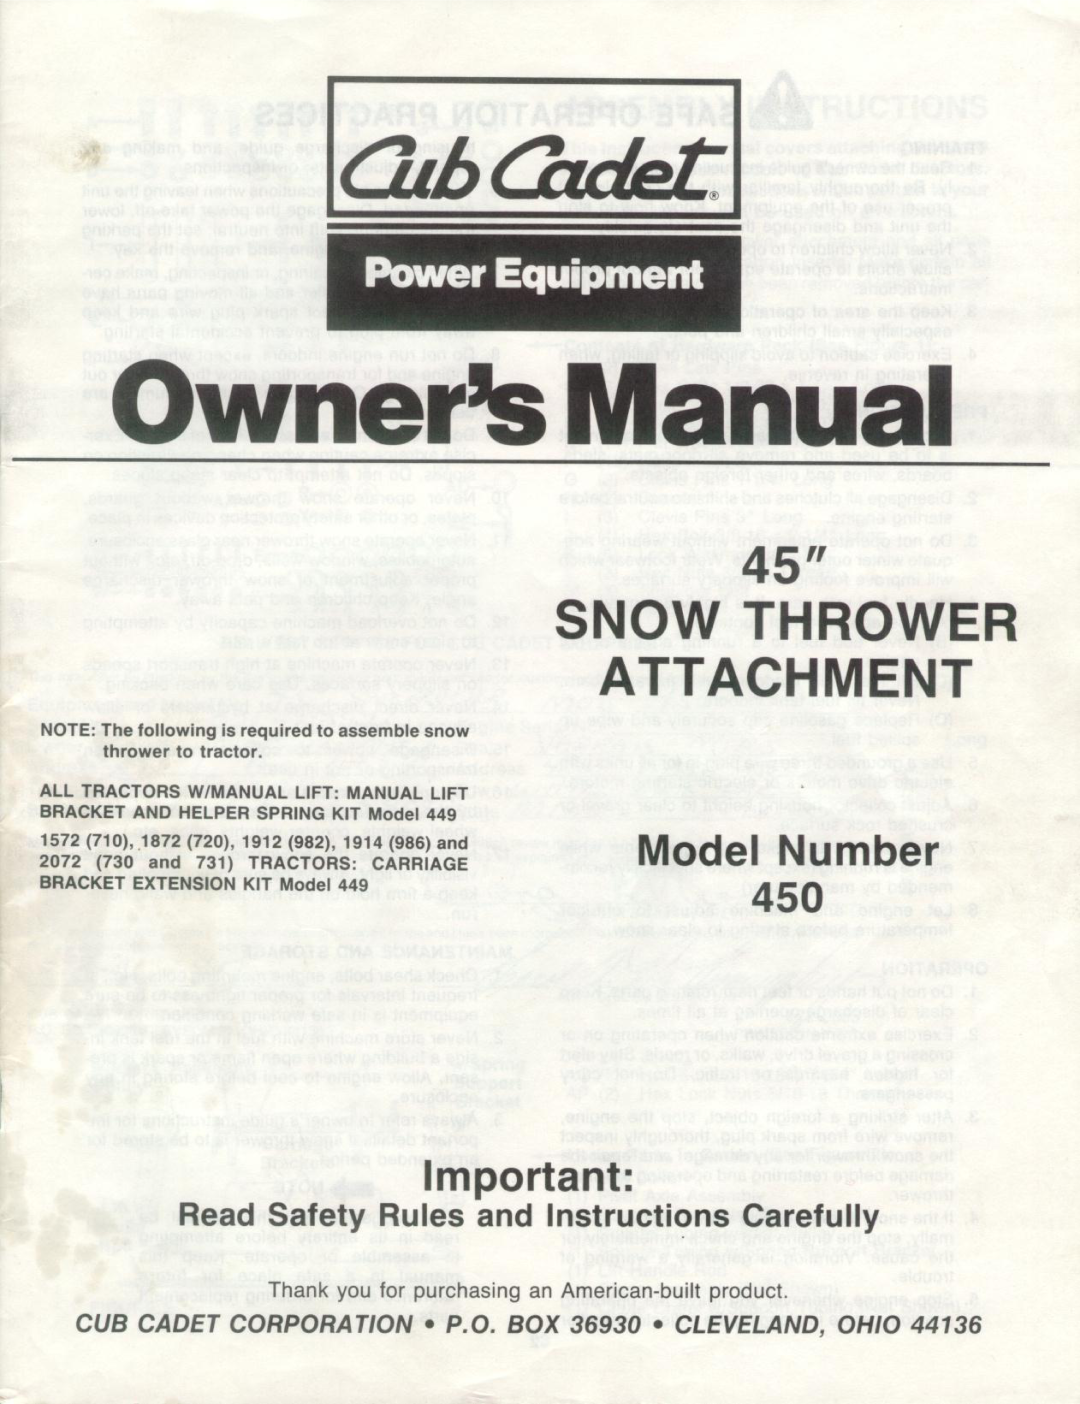 Cub Cadet 450 warranty Operator’S Manual, Rear Tine Tiller - Model Series, CUB CADET LLC, P.O. BOX 361131 CLEVELAND, OHIO 